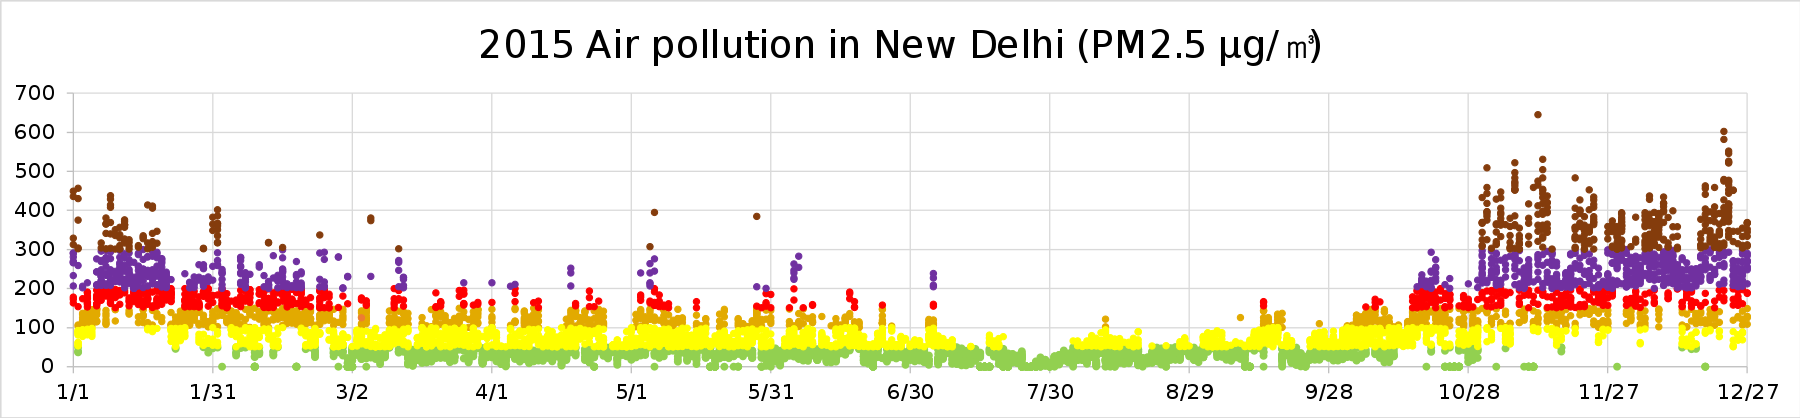 2015 Air pollution in New Delhi (PM2.5 AQI). @media(min-width:720px){.mw-parser-output .columns-start{width:100%}.mw-parser-output .columns-start div.column{float:left;min-width:20em}.mw-parser-output .columns-2 div.column{width:50%}.mw-parser-output .columns-3 div.column{width:33.3%}.mw-parser-output .columns-4 div.column{width:25%}.mw-parser-output .columns-5 div.column{width:20%)) .mw-parser-output .legend{page-break-inside:avoid;break-inside:avoid-column}.mw-parser-output .legend-color{display:inline-block;min-width:1.25em;height:1.25em;line-height:1.25;margin:1px 0;text-align:center;border:1px solid black;background-color:transparent;color:black}.mw-parser-output .legend-text{}   Hazardous     Very Unhealthy     Unhealthy     Unhealthy for Sensitive Groups    Moderate     Good